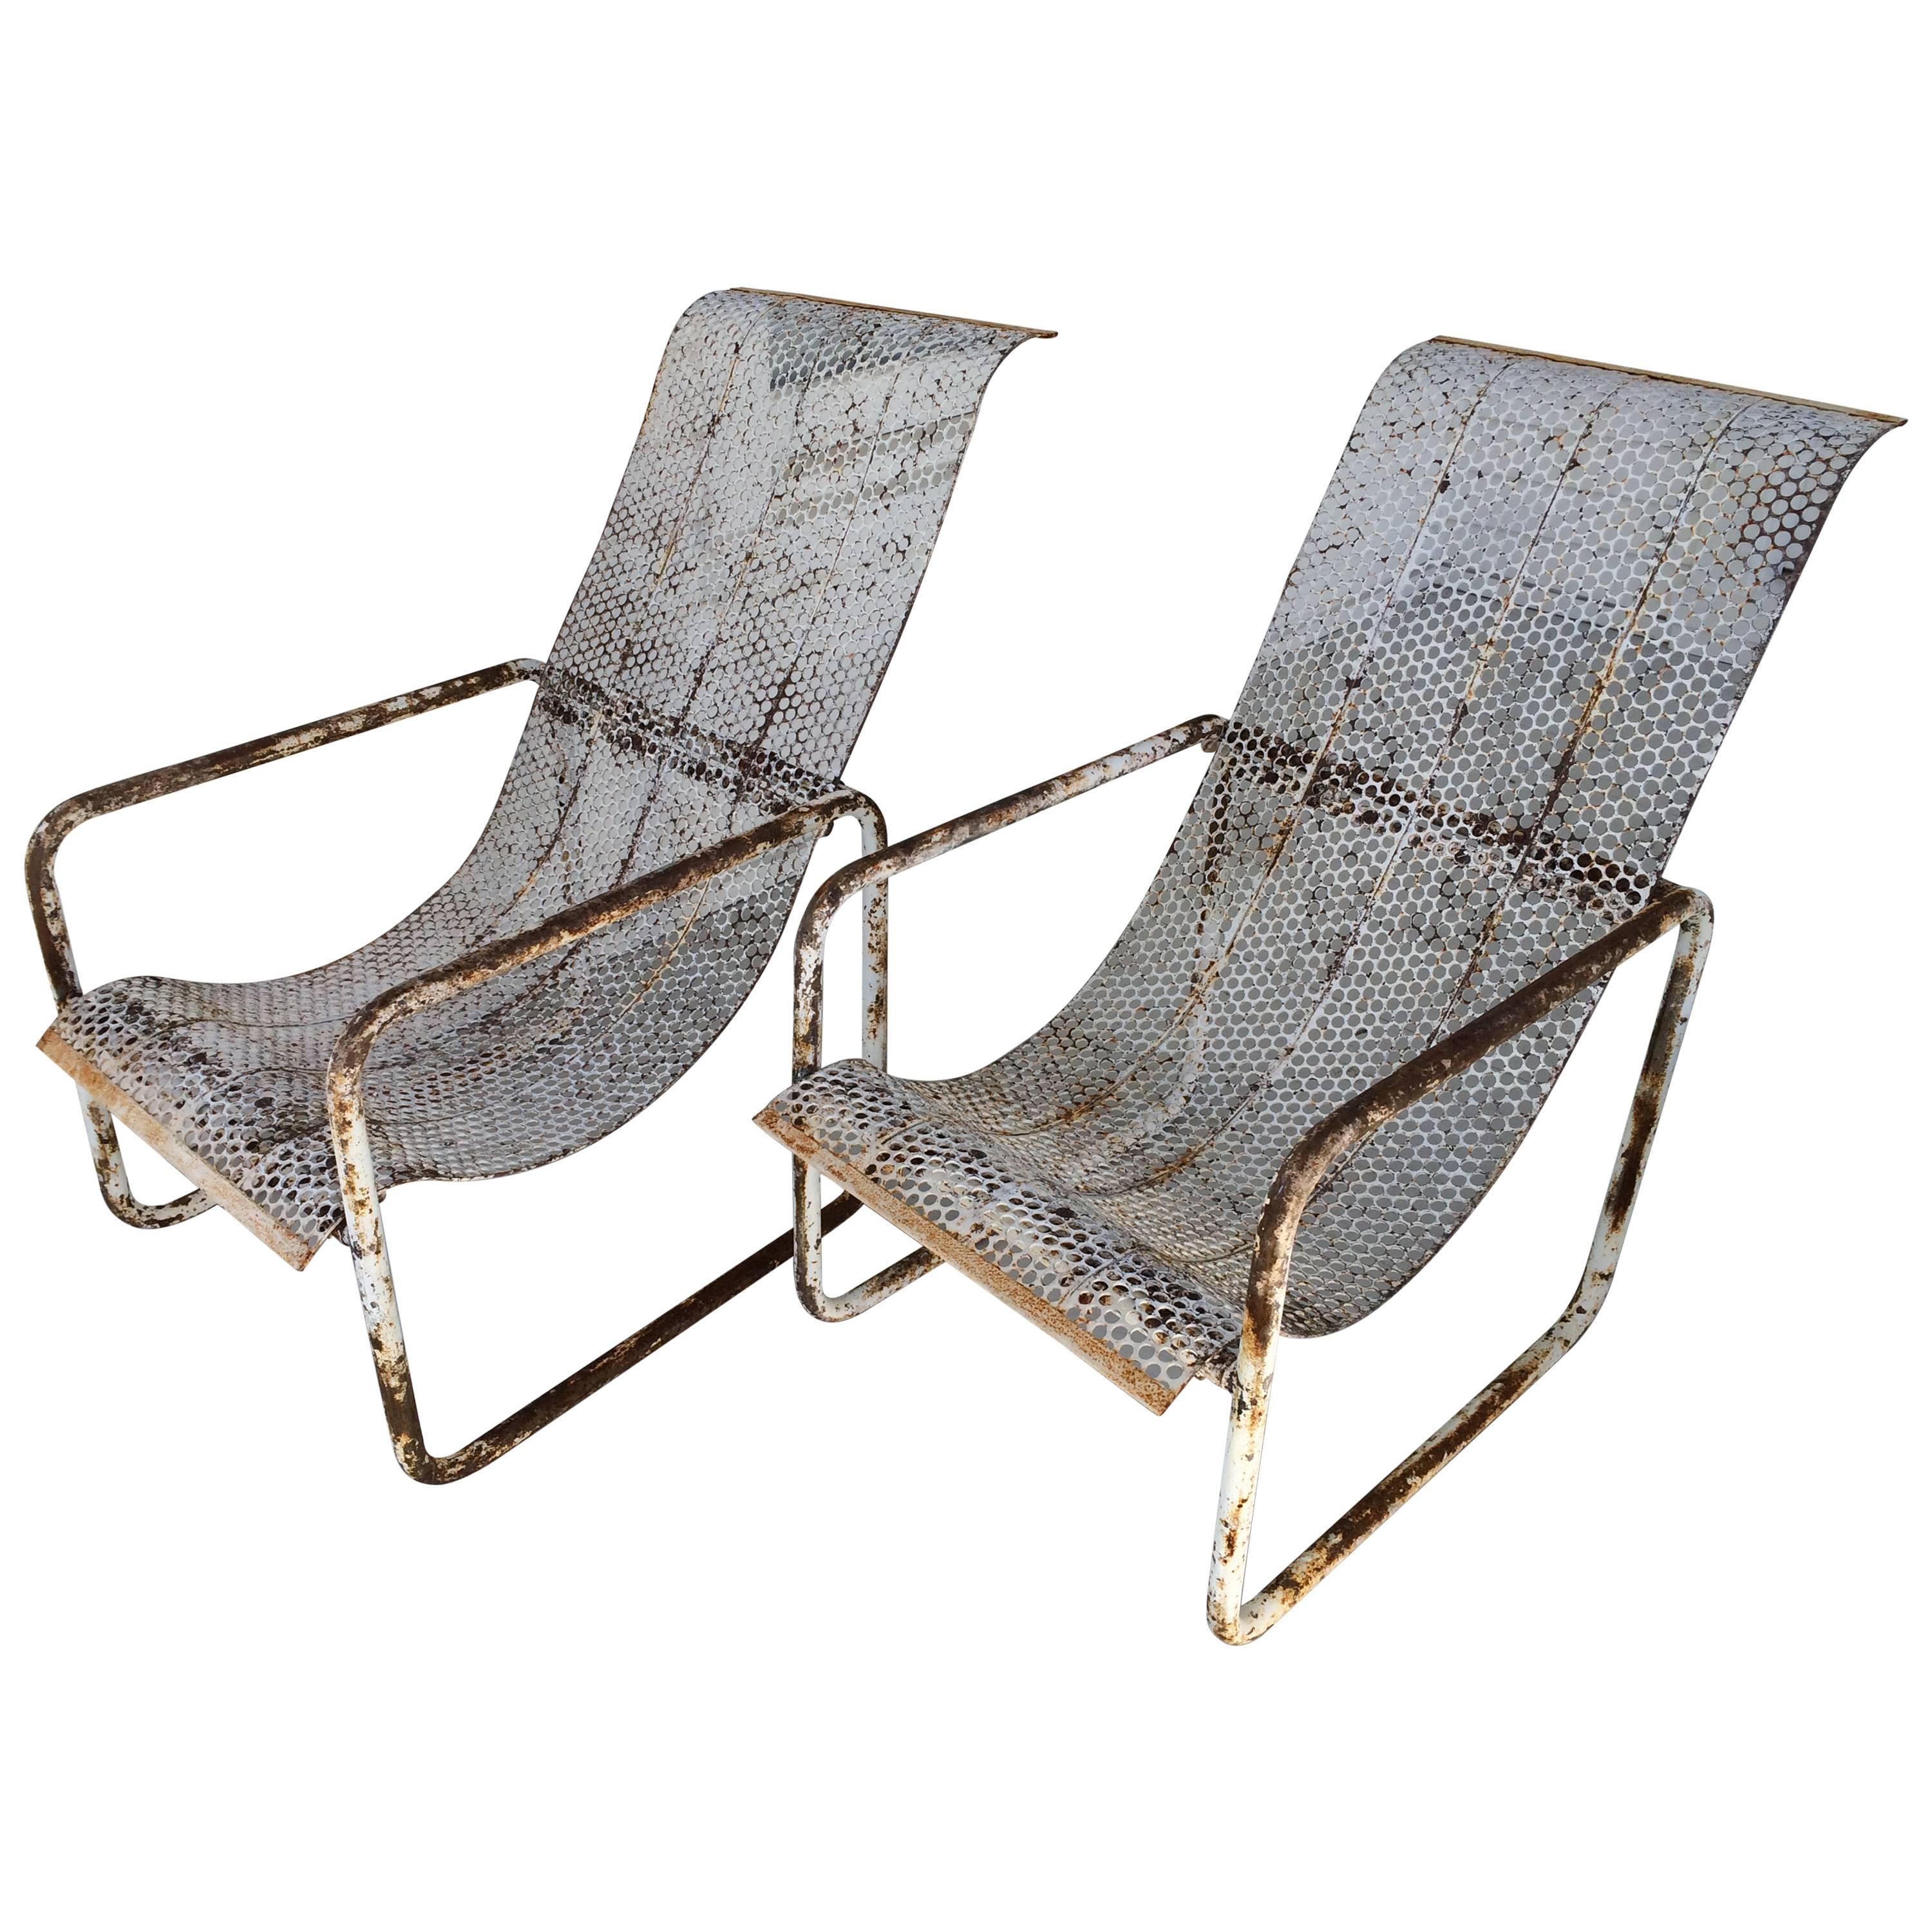 French Industrial Mid-Century Steel Garden Chairs